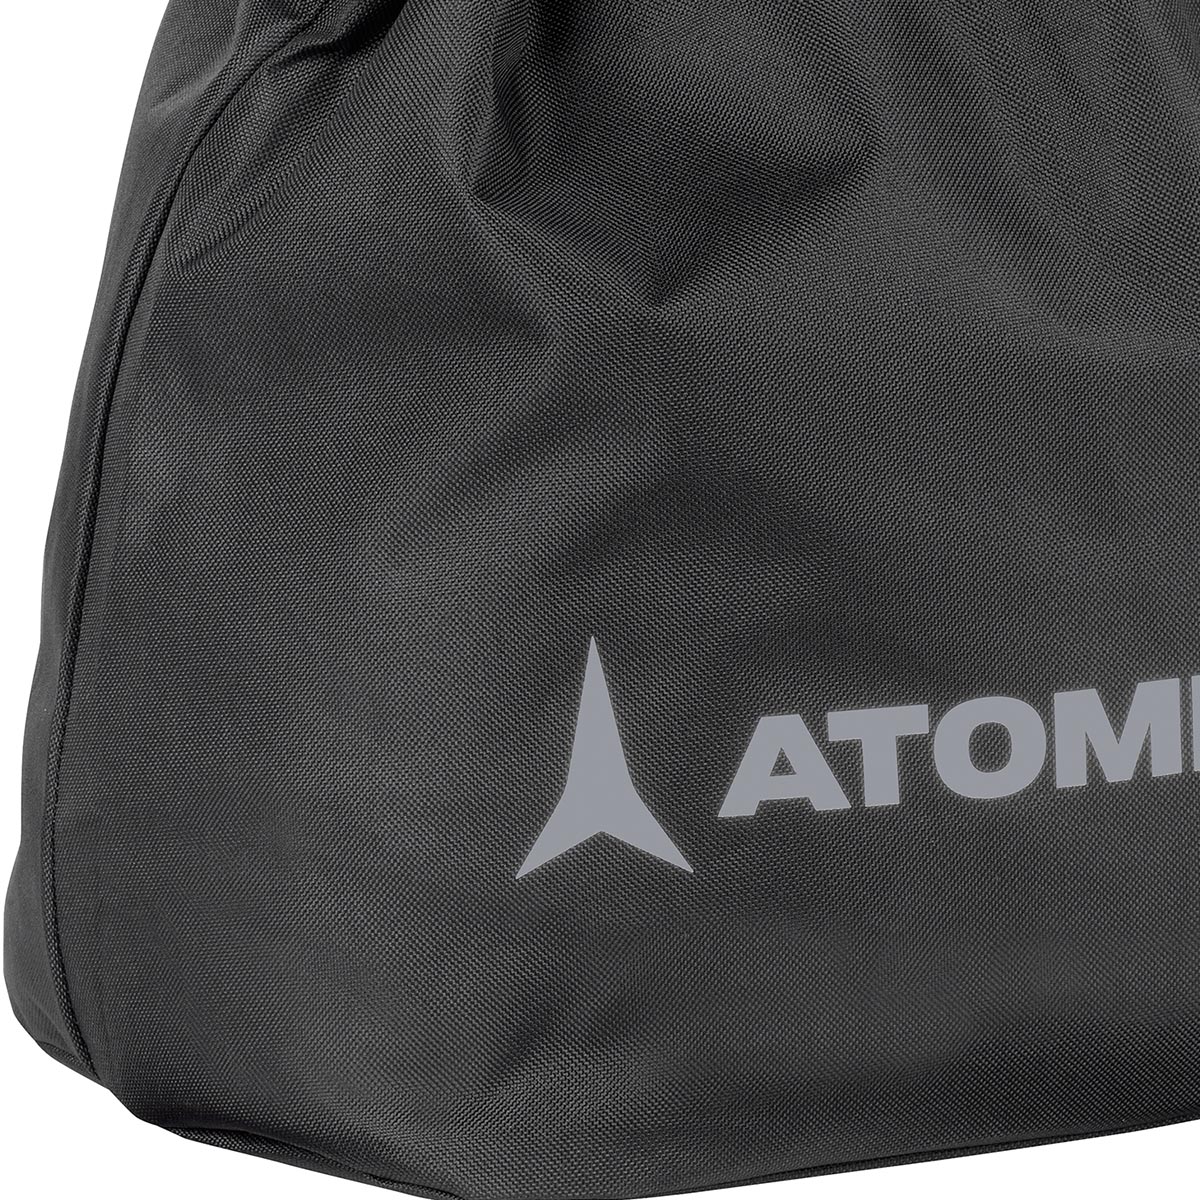 ATOMIC - A BAG